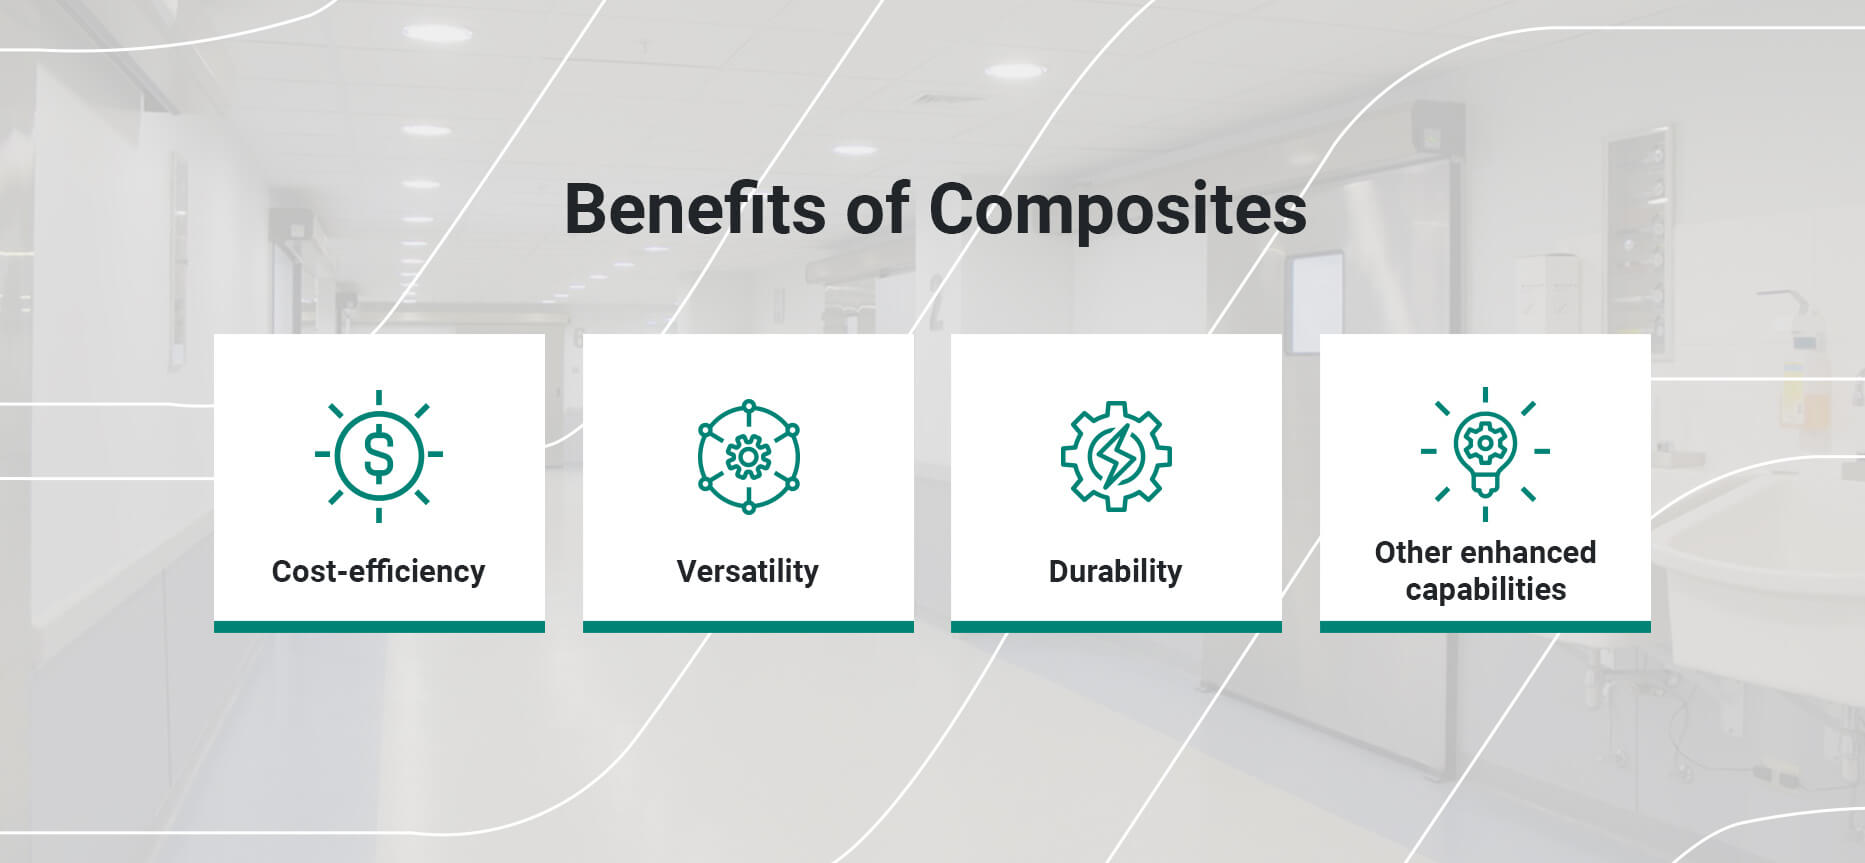 Benefits of composites